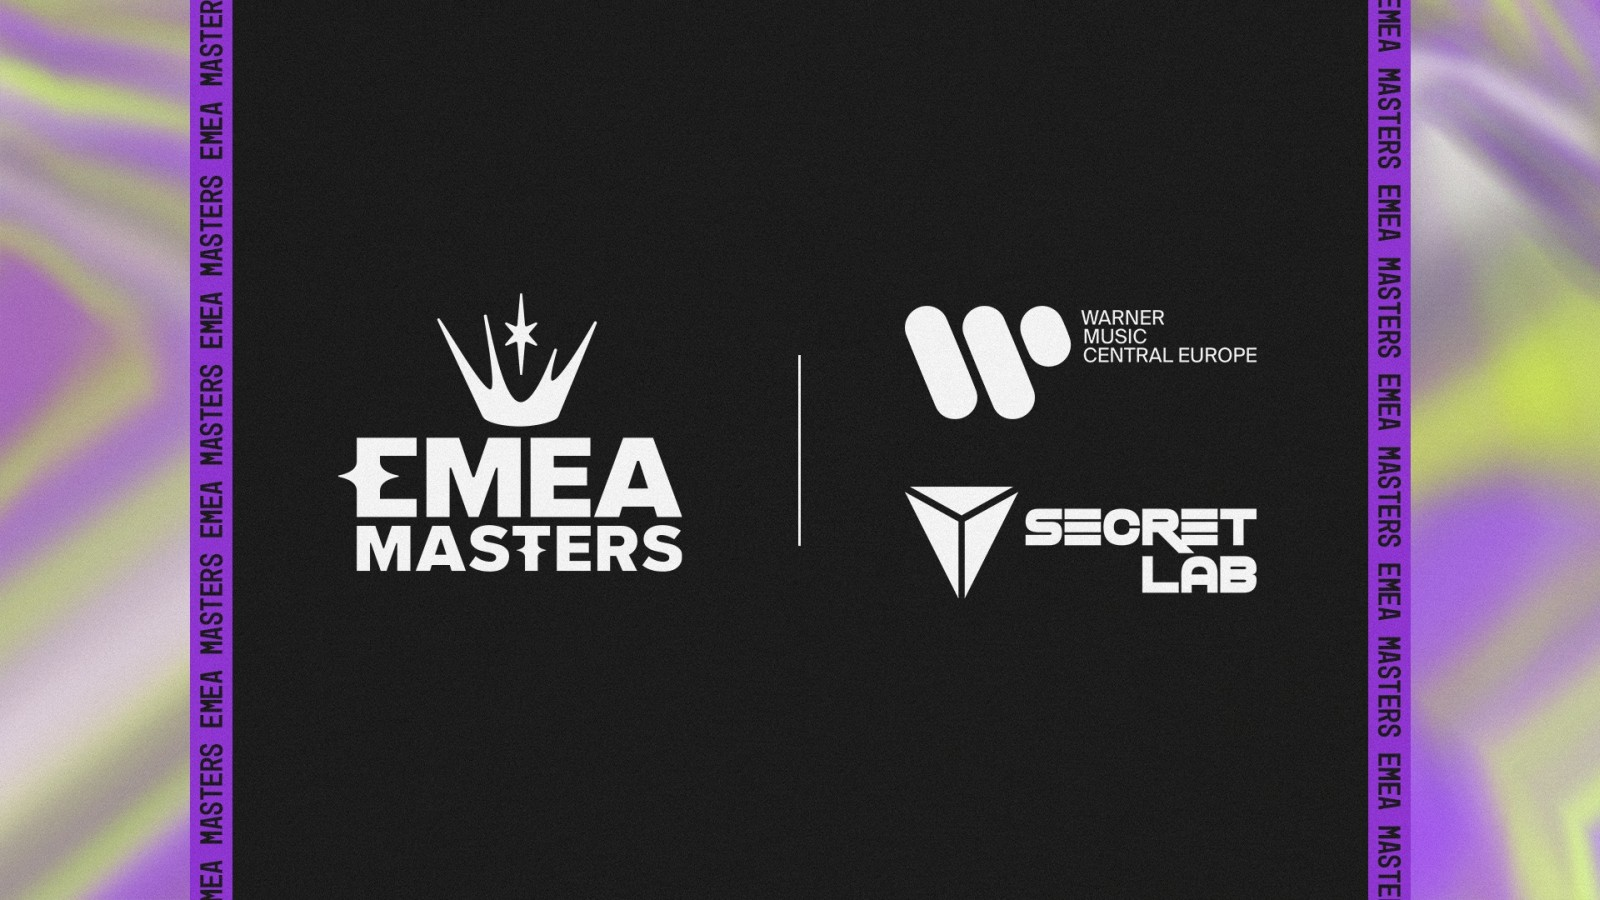 EMEA Masters renews Warner Music, Secretlab partnerships